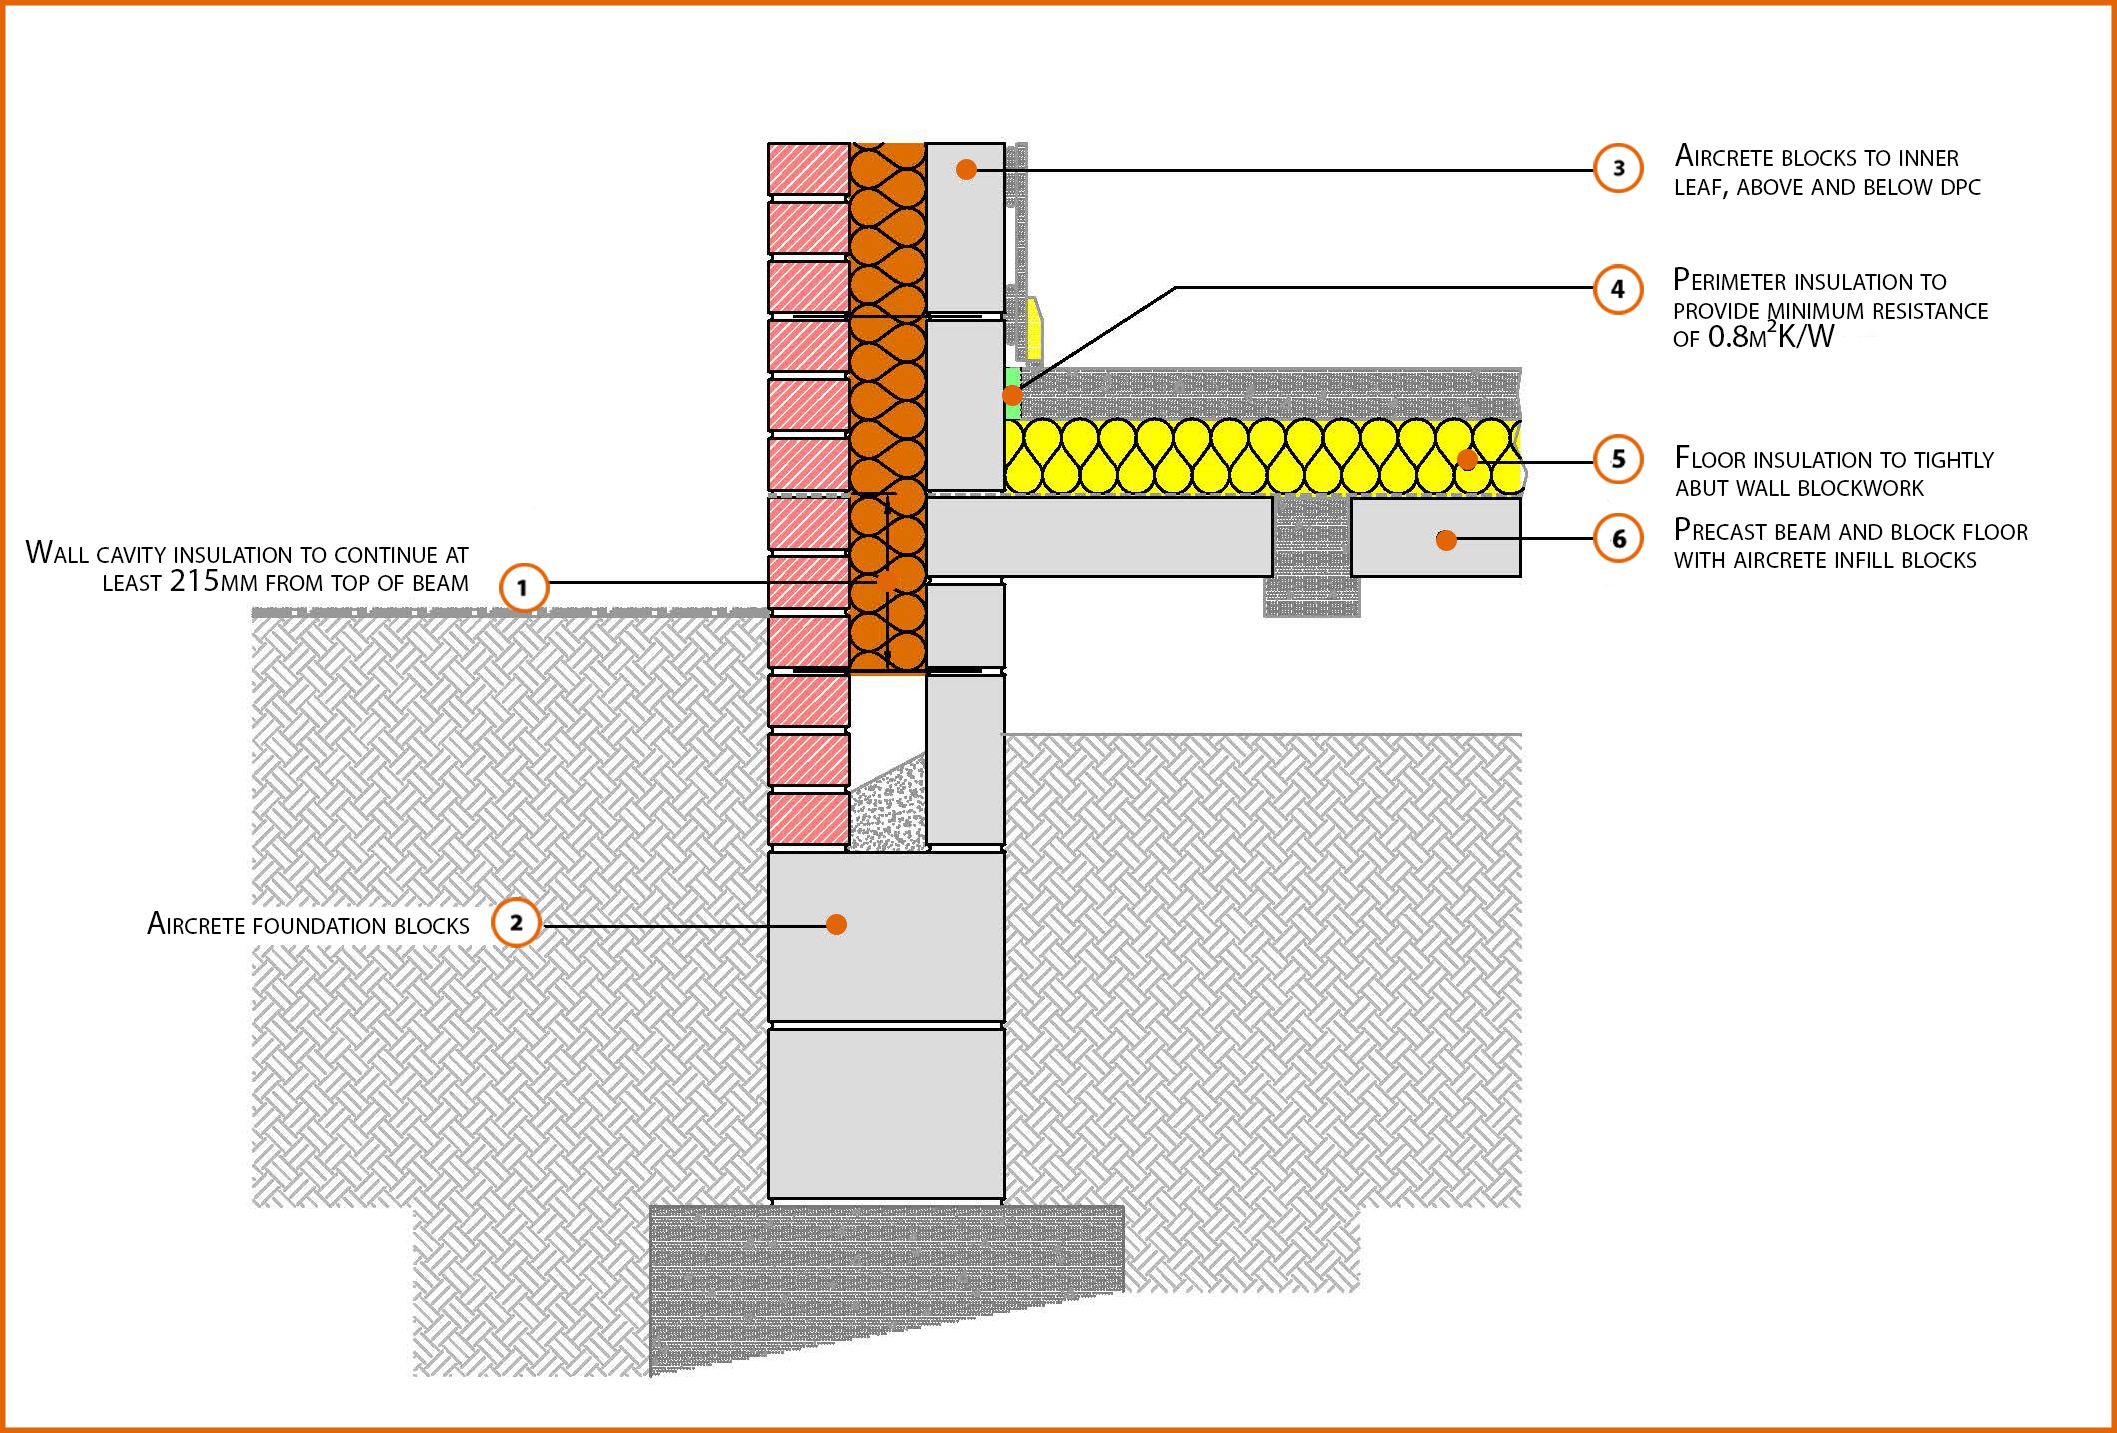 E5MCFF17 Suspended Beam And Block Floor, Insulation Above Slab LABC